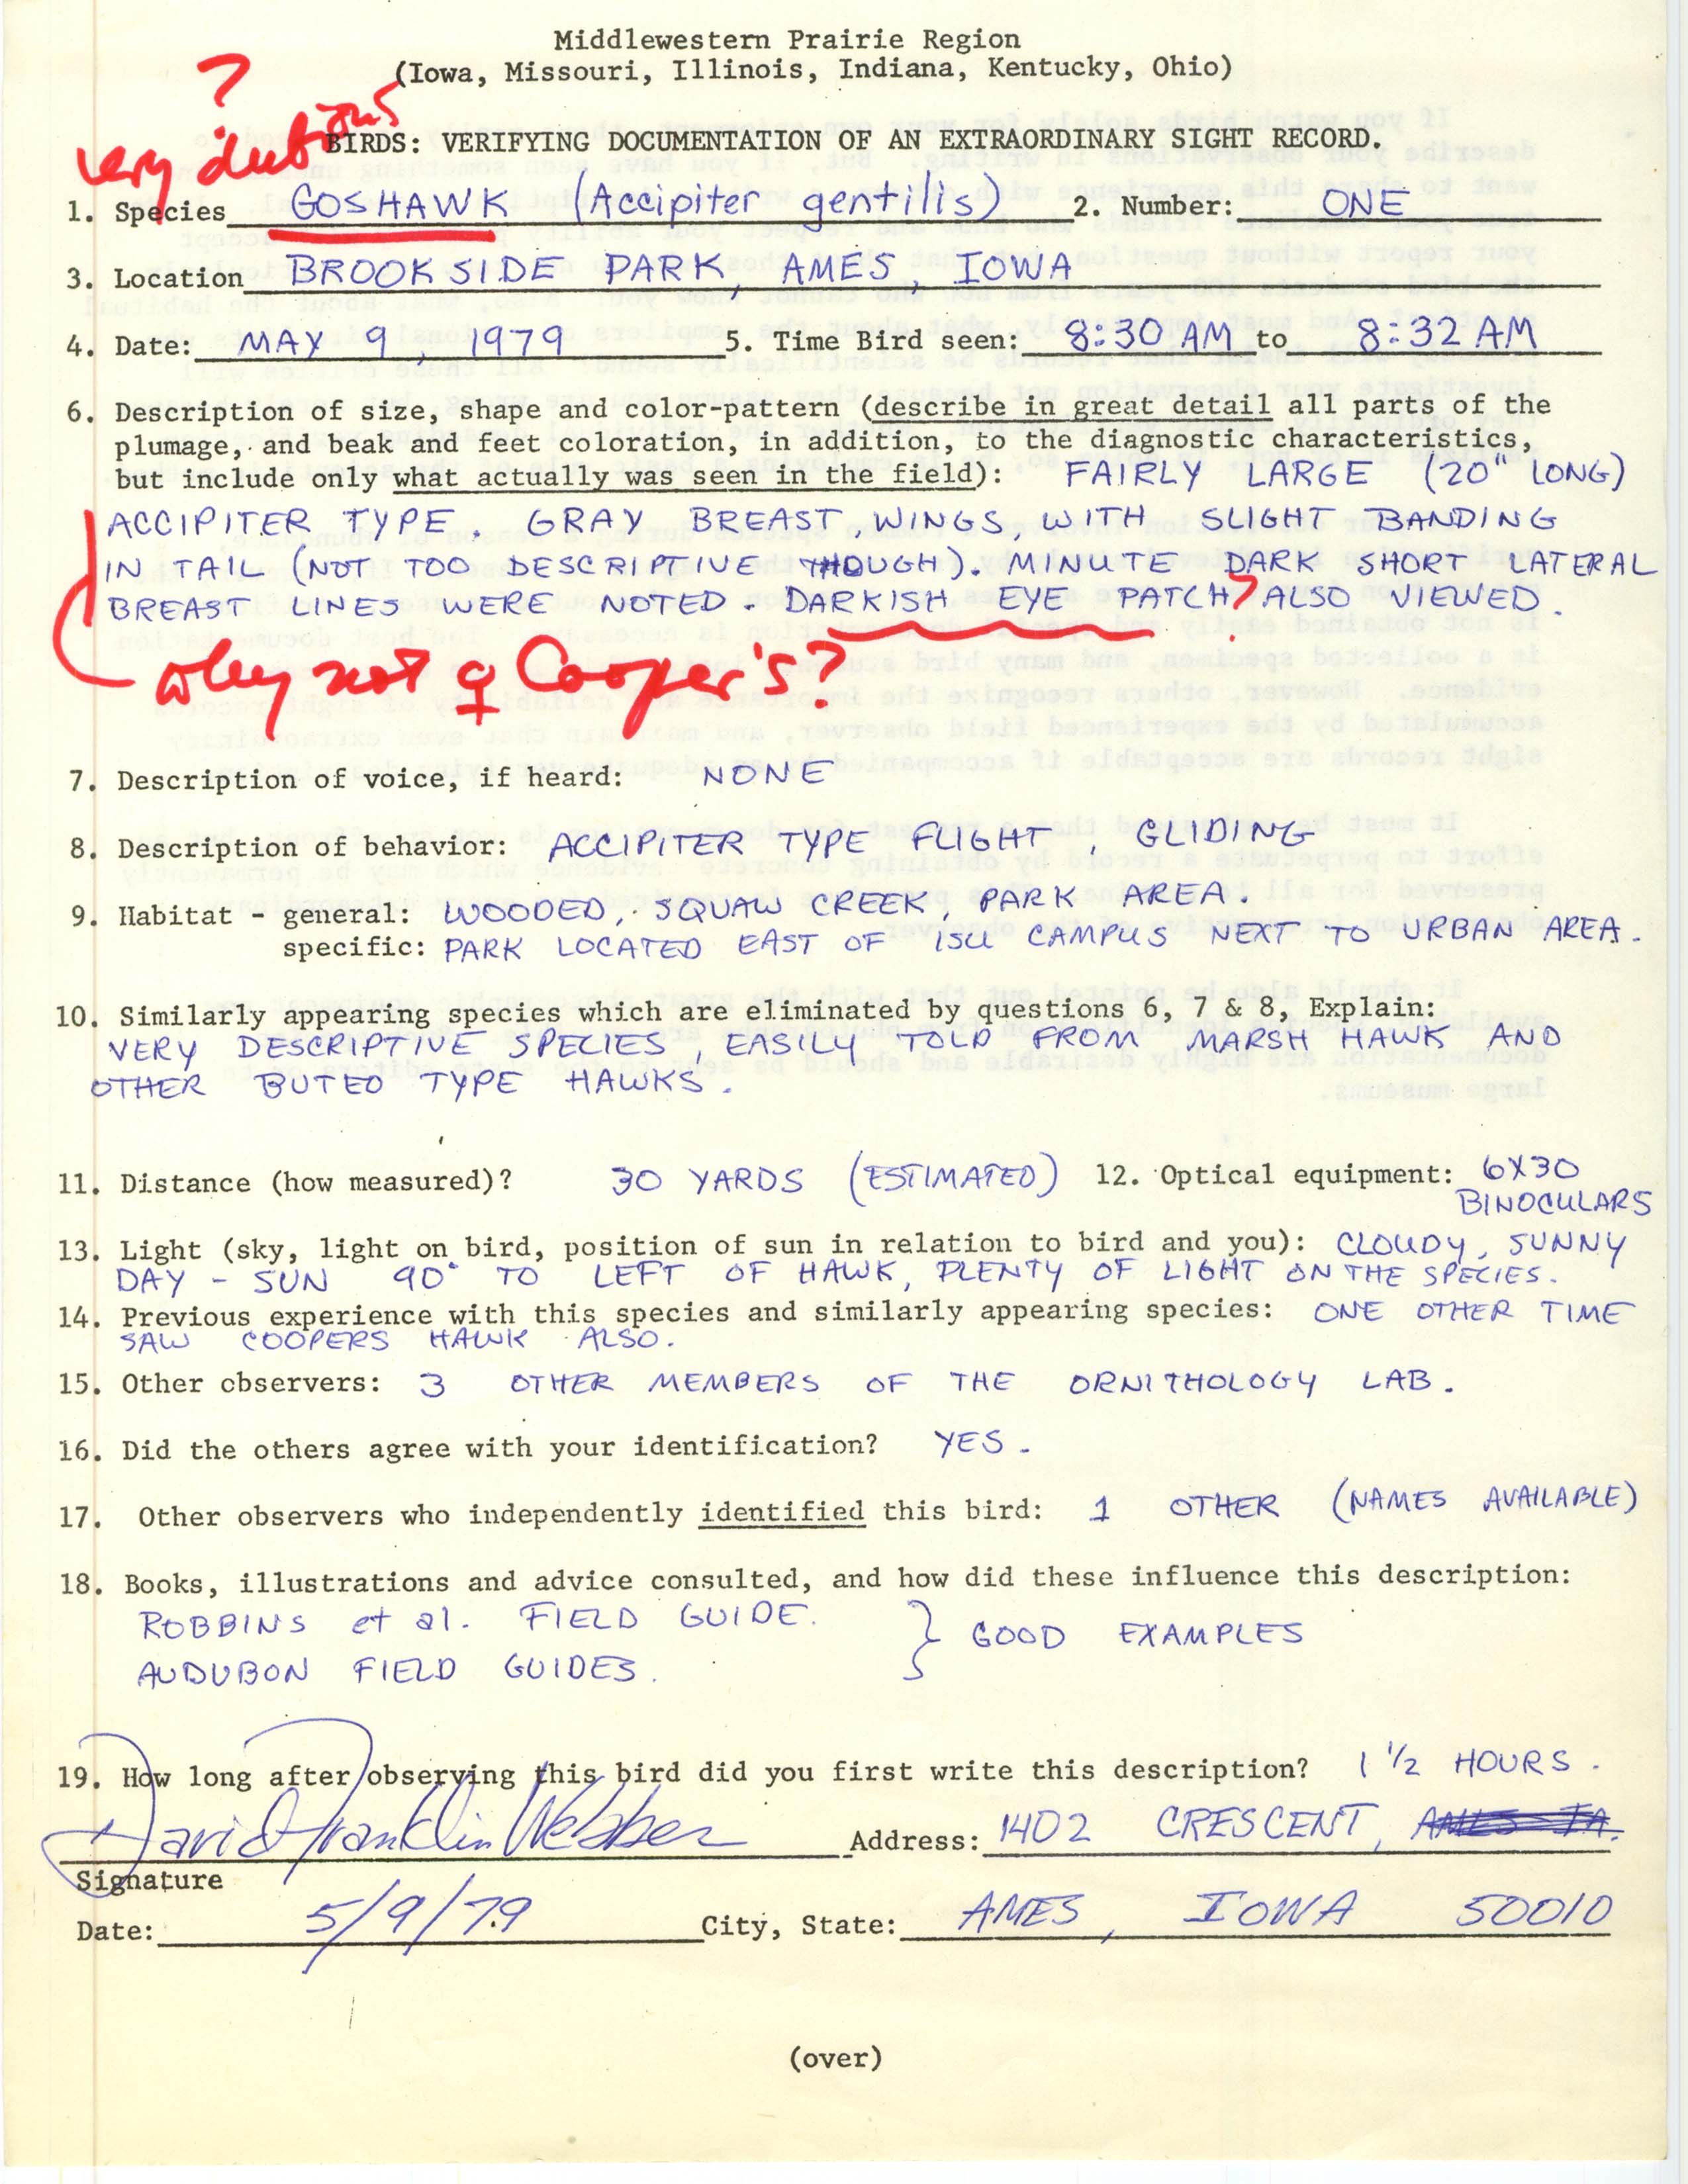 Rare bird documentation form for Northern Goshawk at Brookside Park, 1979